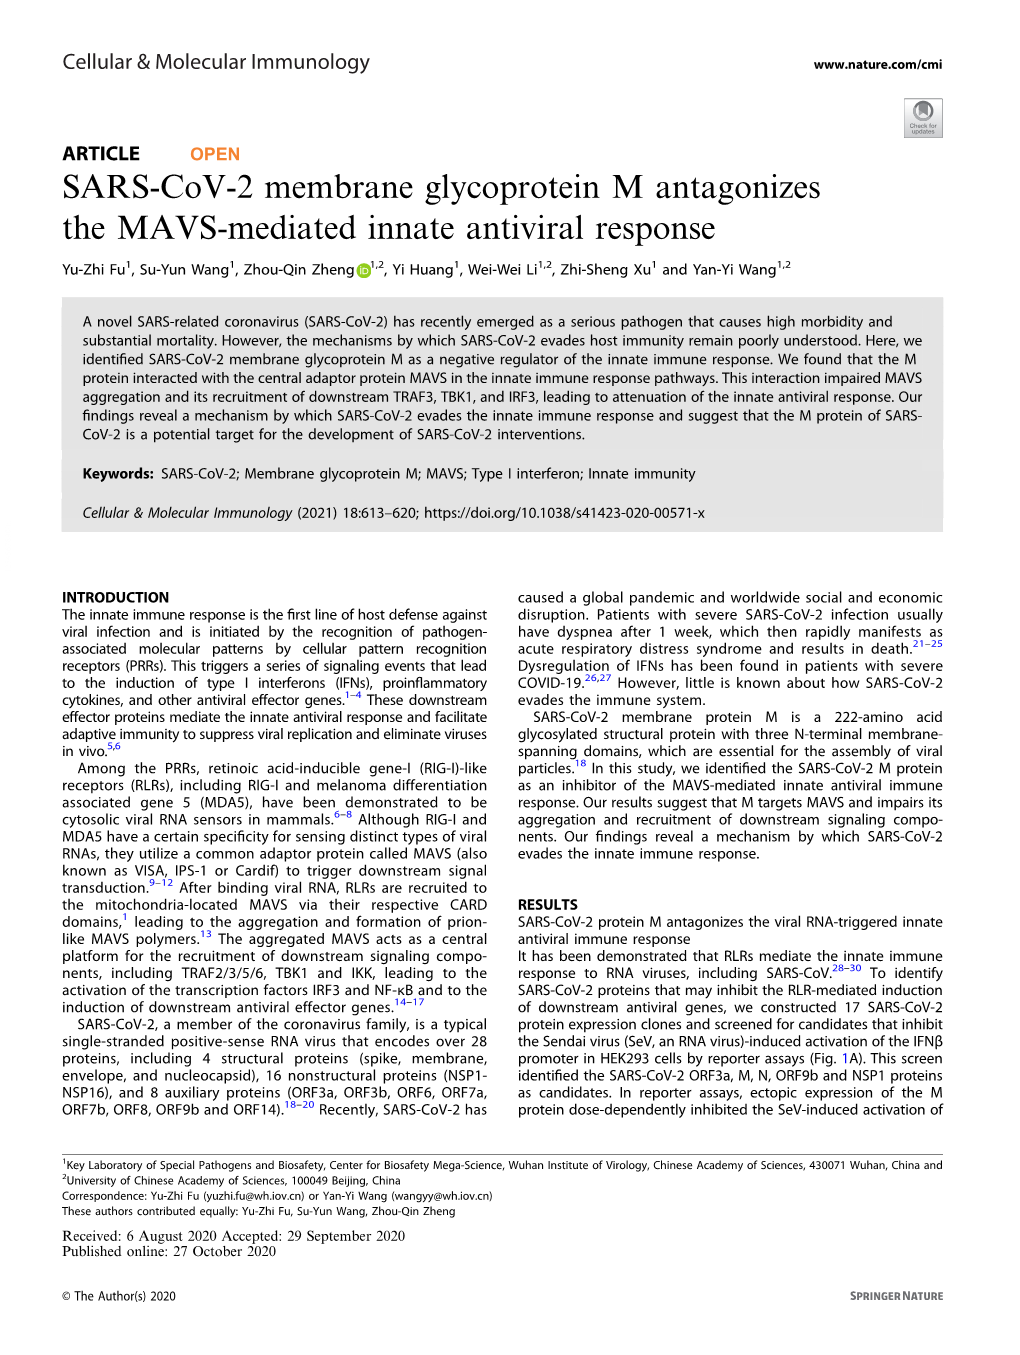 SARS-Cov-2 Membrane Glycoprotein M Antagonizes the MAVS-Mediated Innate Antiviral Response